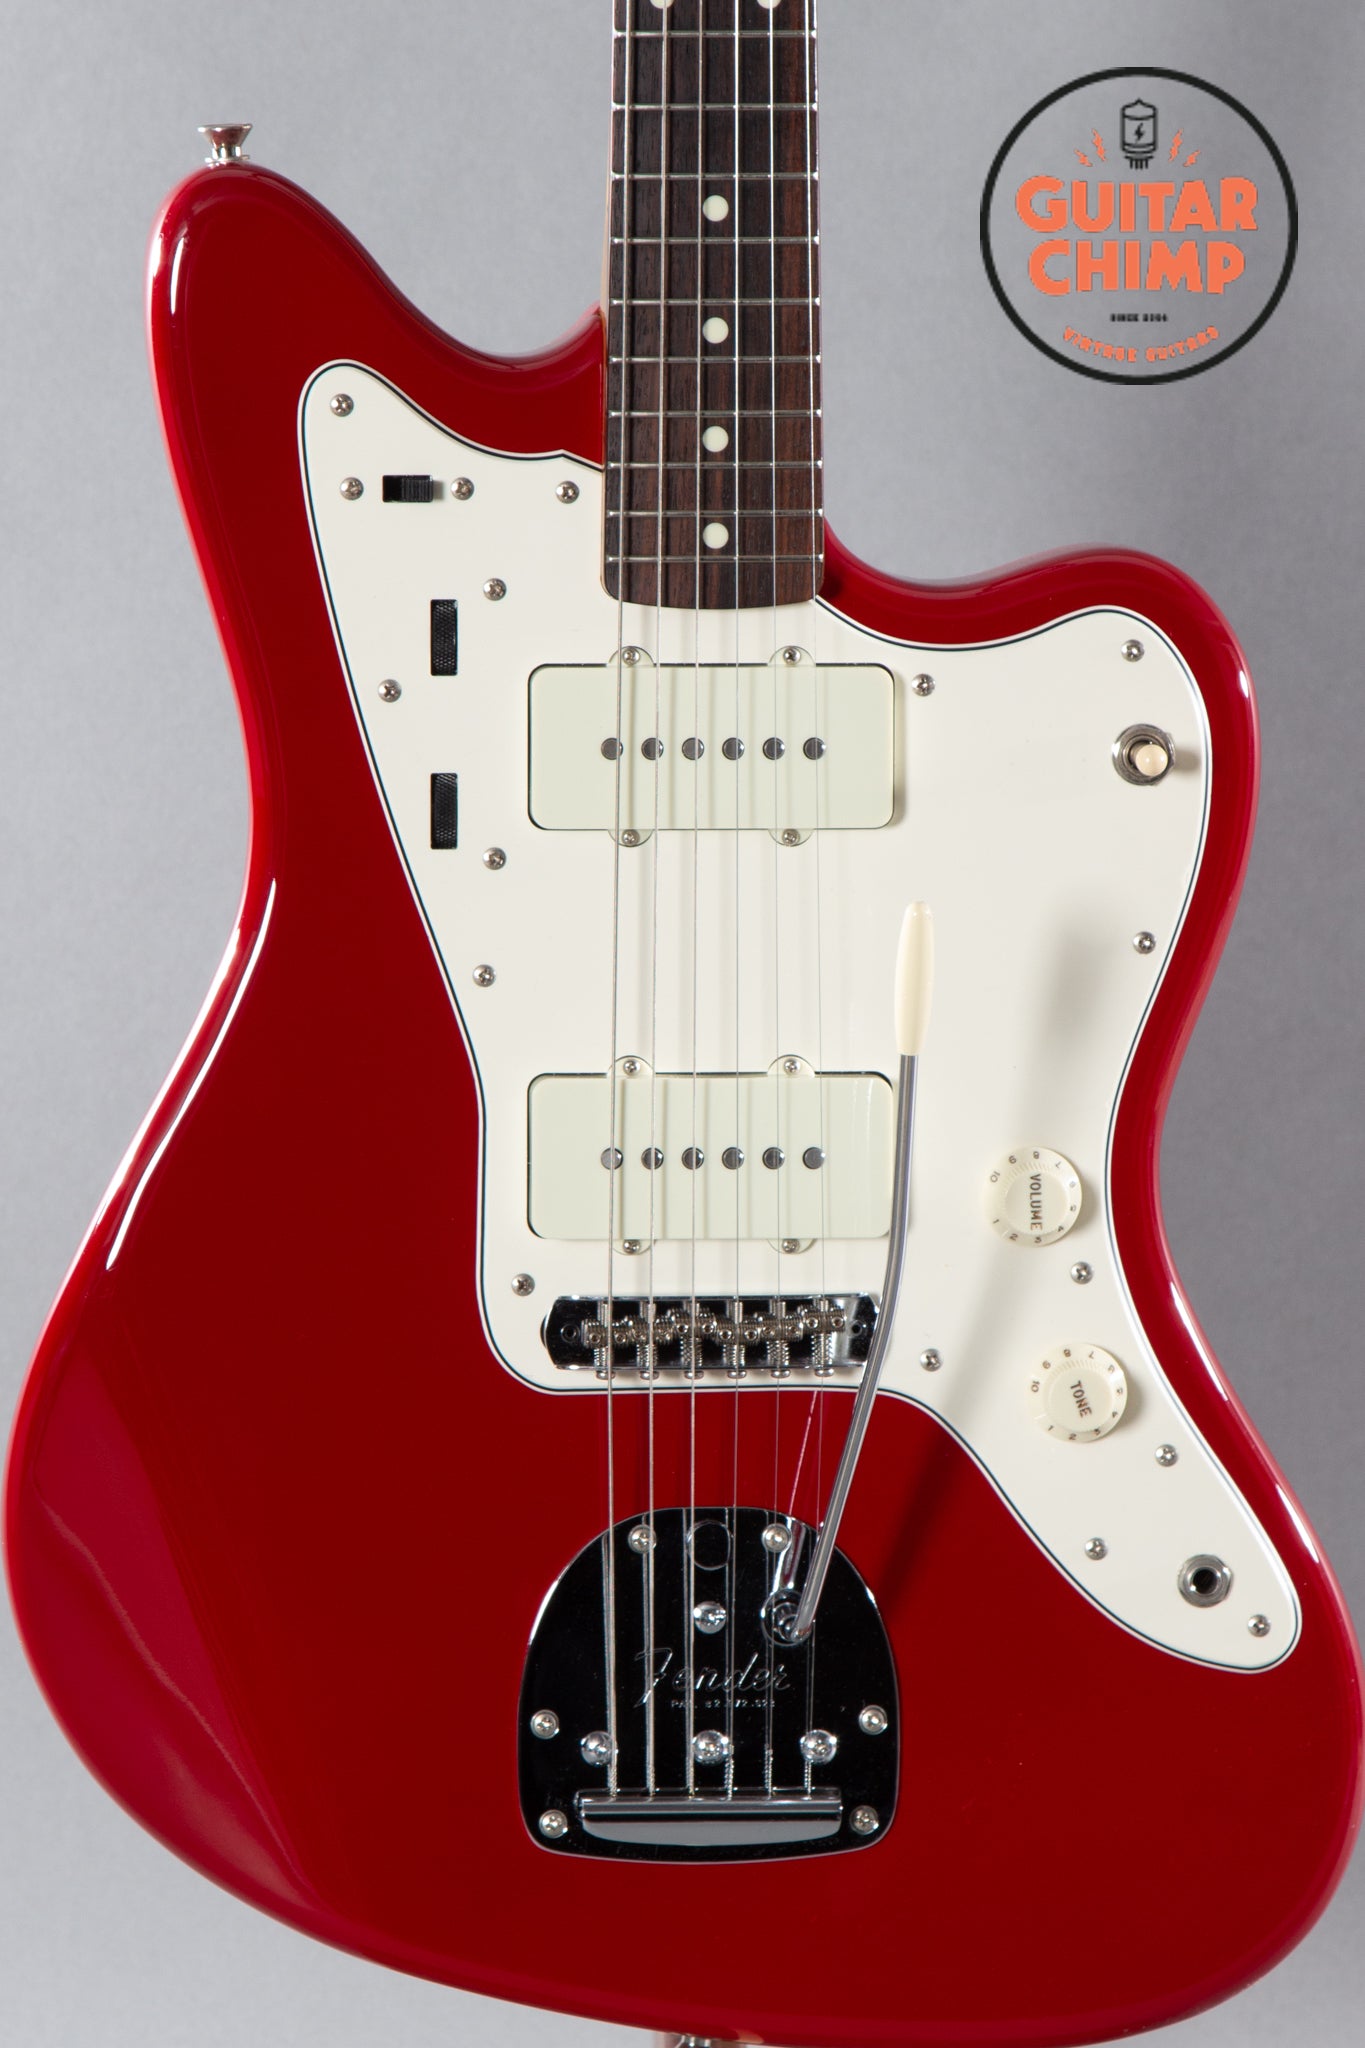 Fender Traditional s Japan Jazzmaster Torino Red   Guitar Chimp